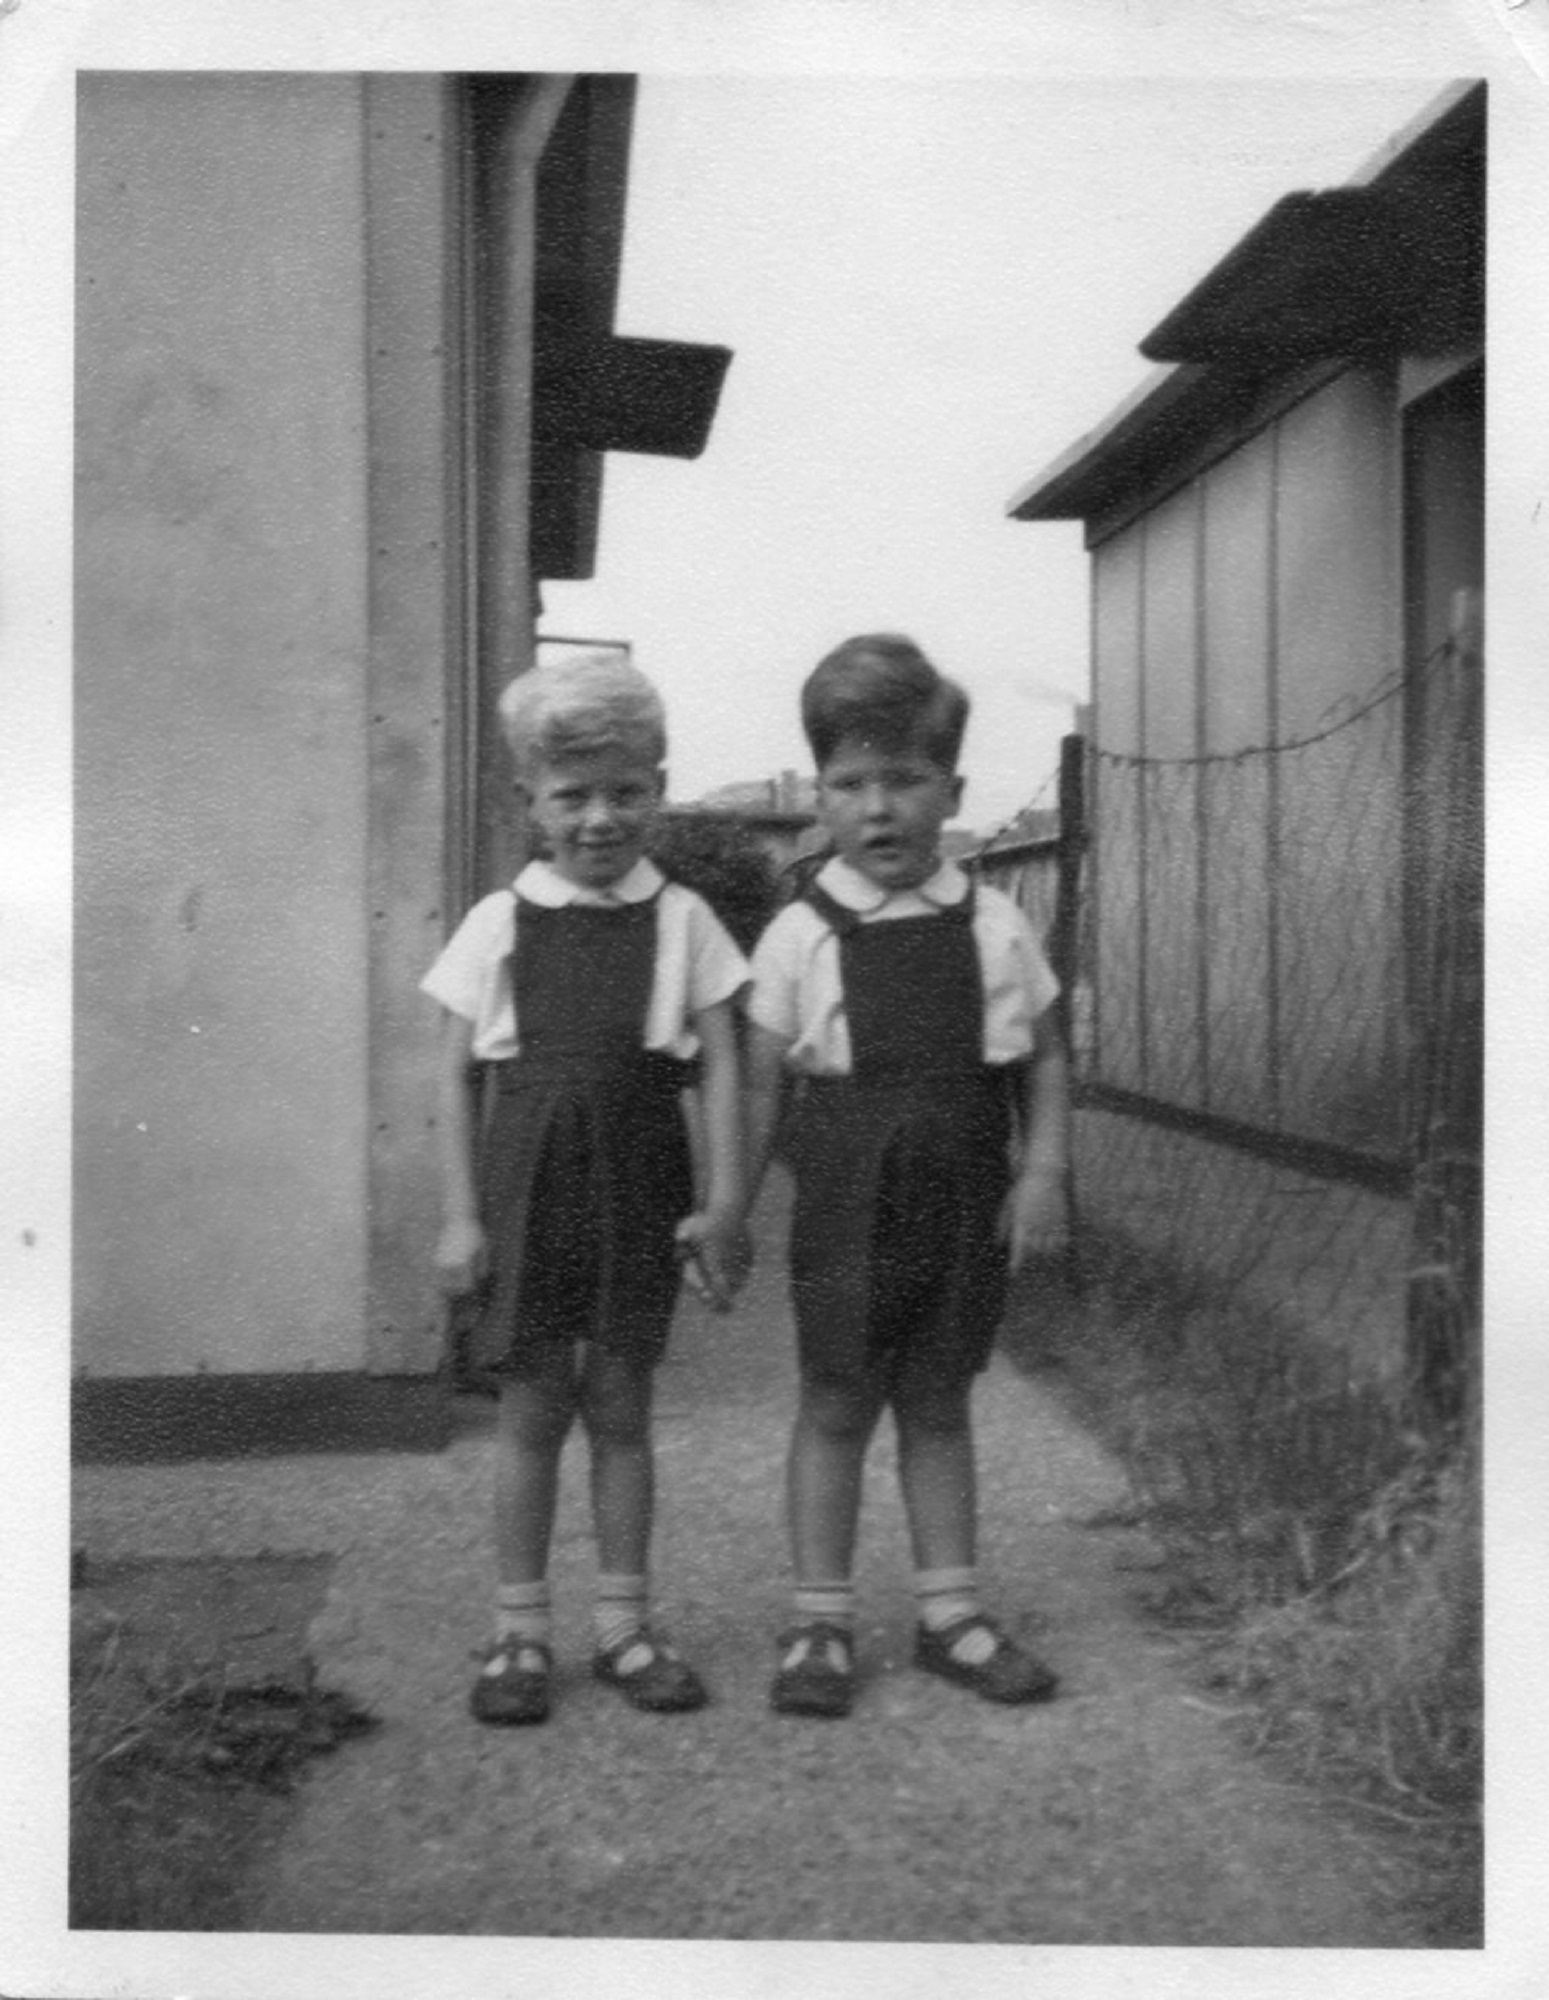 Twins Robert and David Flanders. 7 Hind Grove, Poplar, E.14. 1954